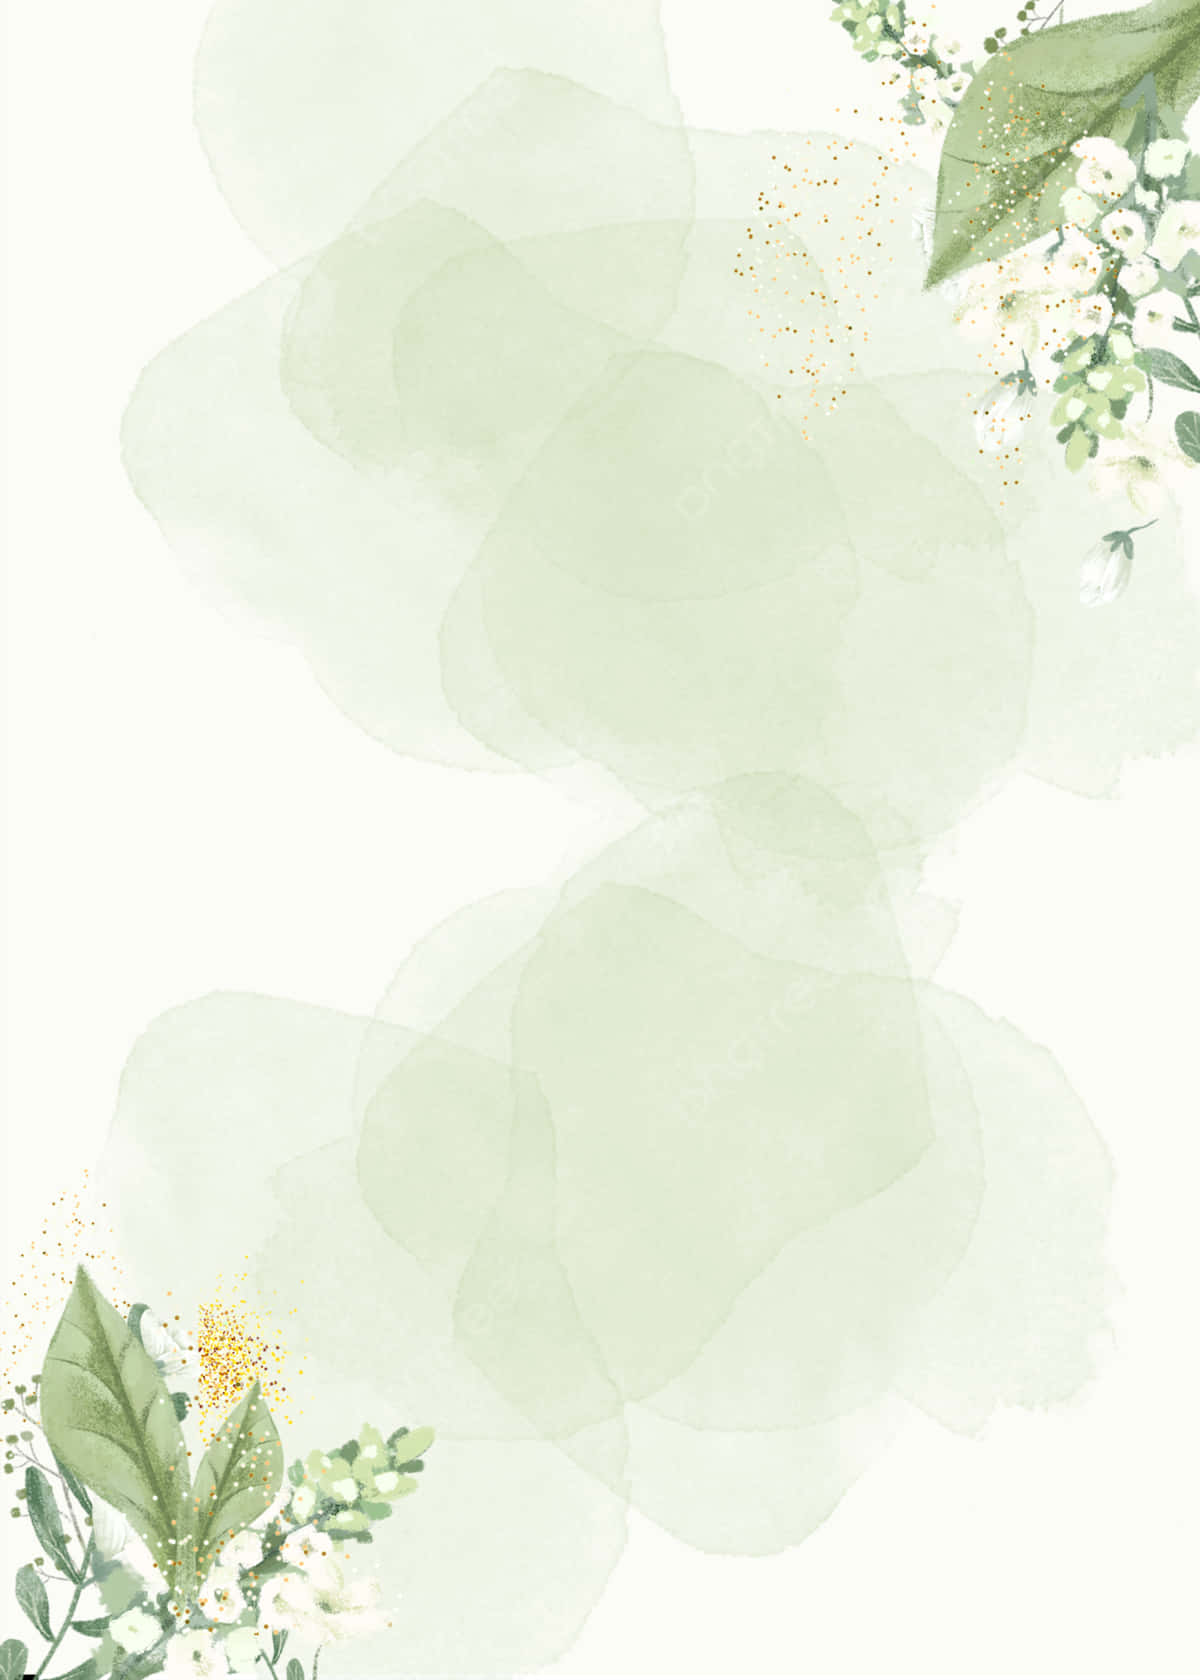 https://wallpapers.com/images/hd/green-floral-1200-x-1680-background-9dpegekrbsolbx3k.jpg